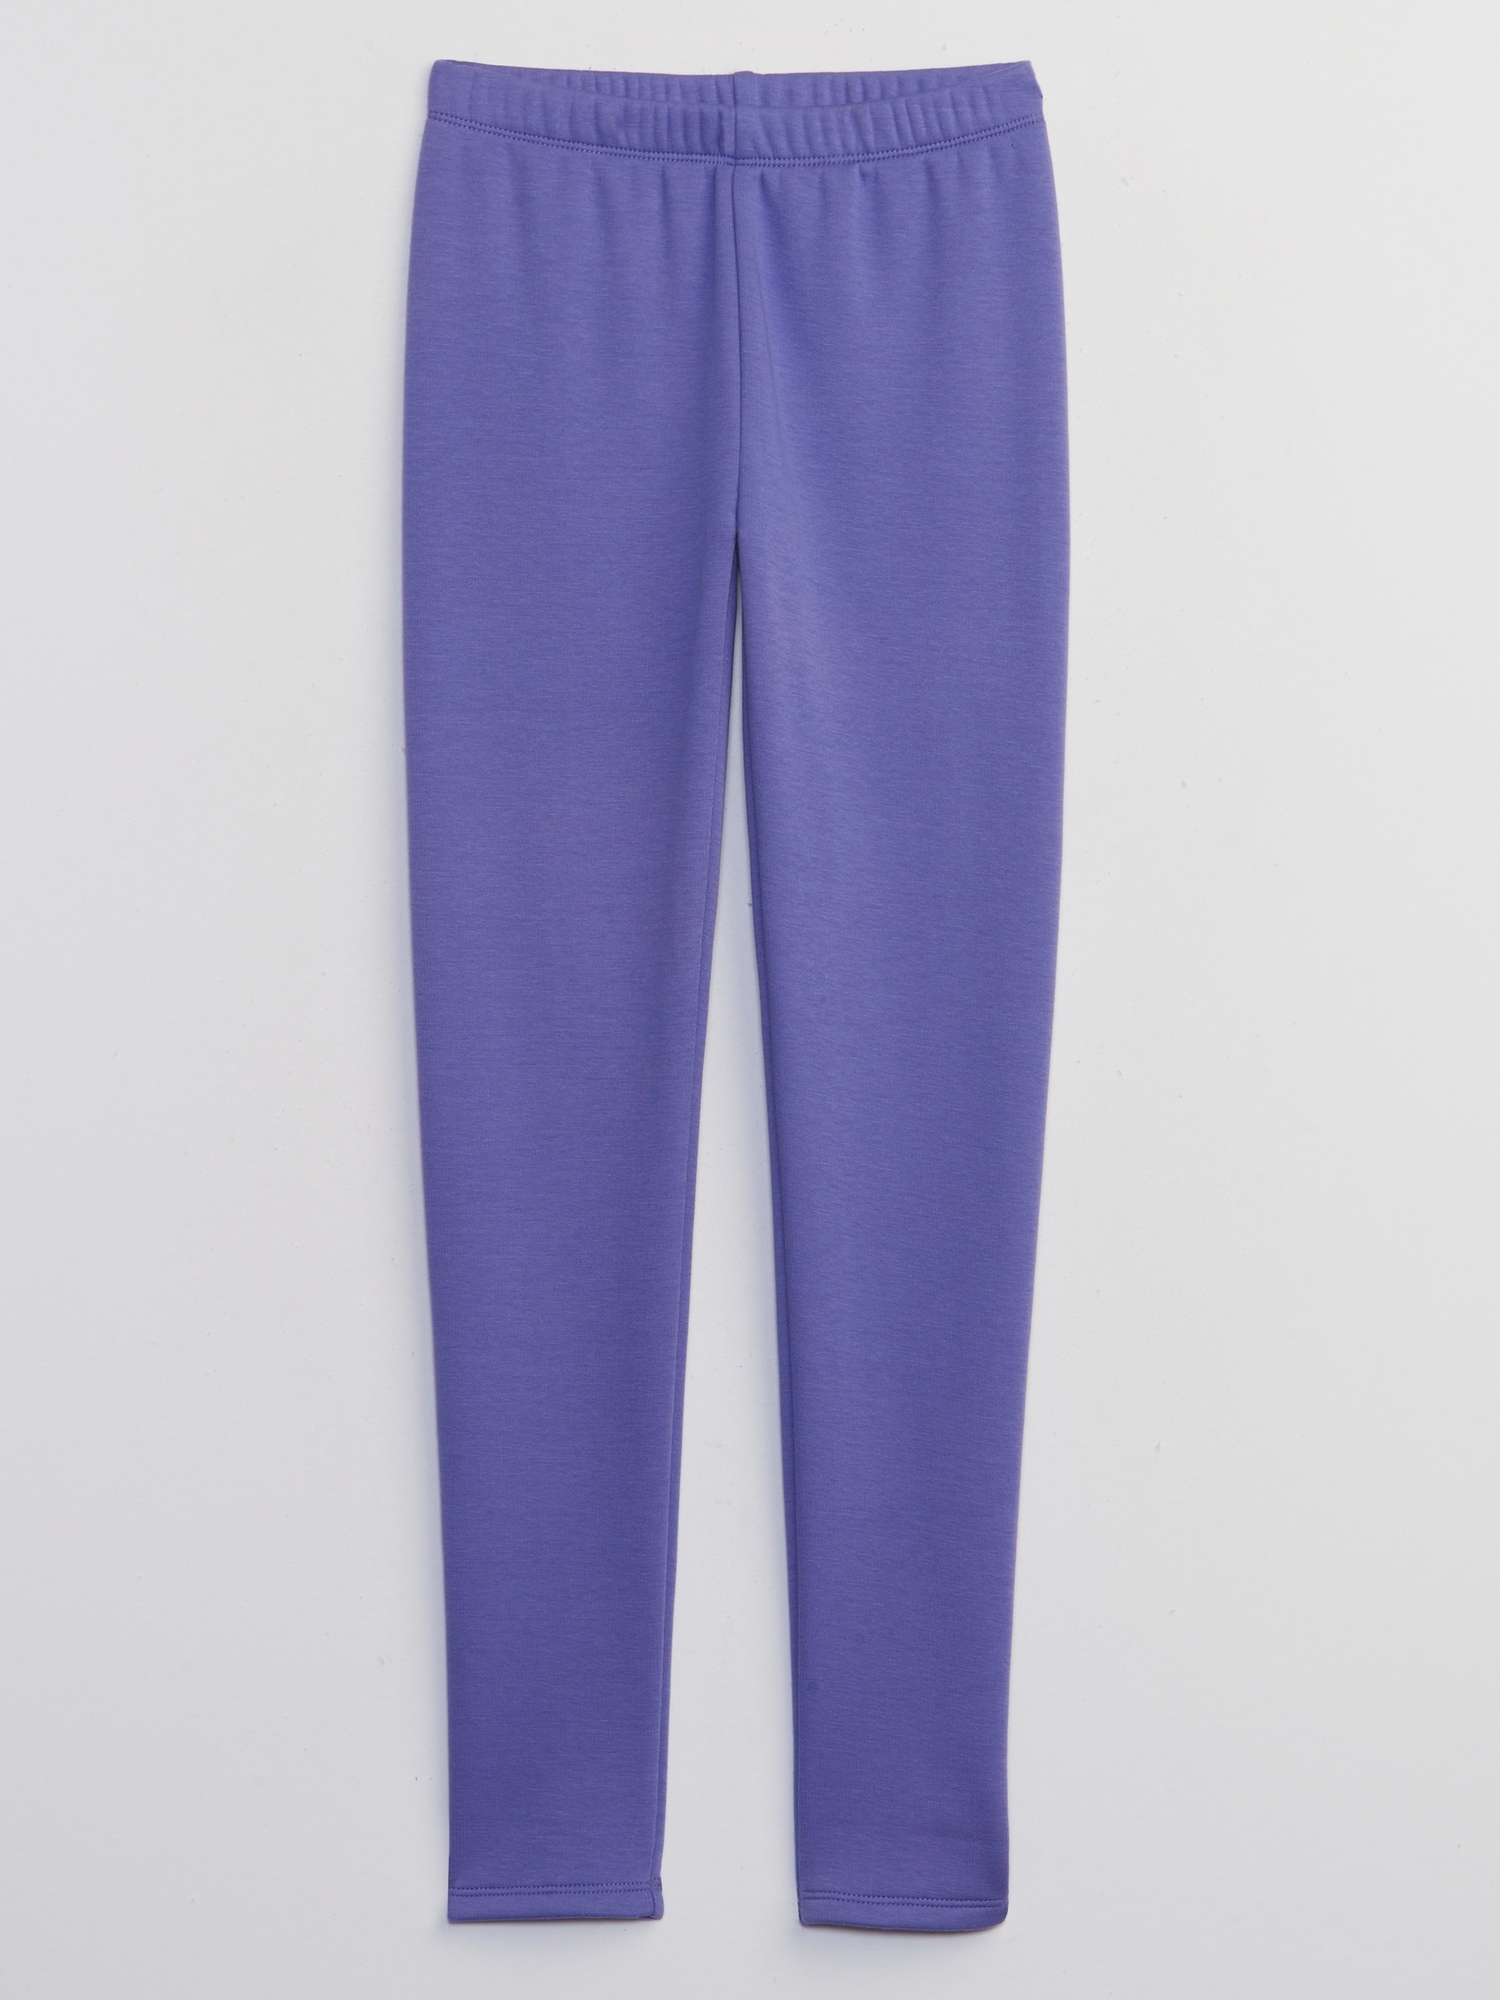 Buy Lilac Heart Fleece Lined Leggings 6-7 years, Trousers and leggings